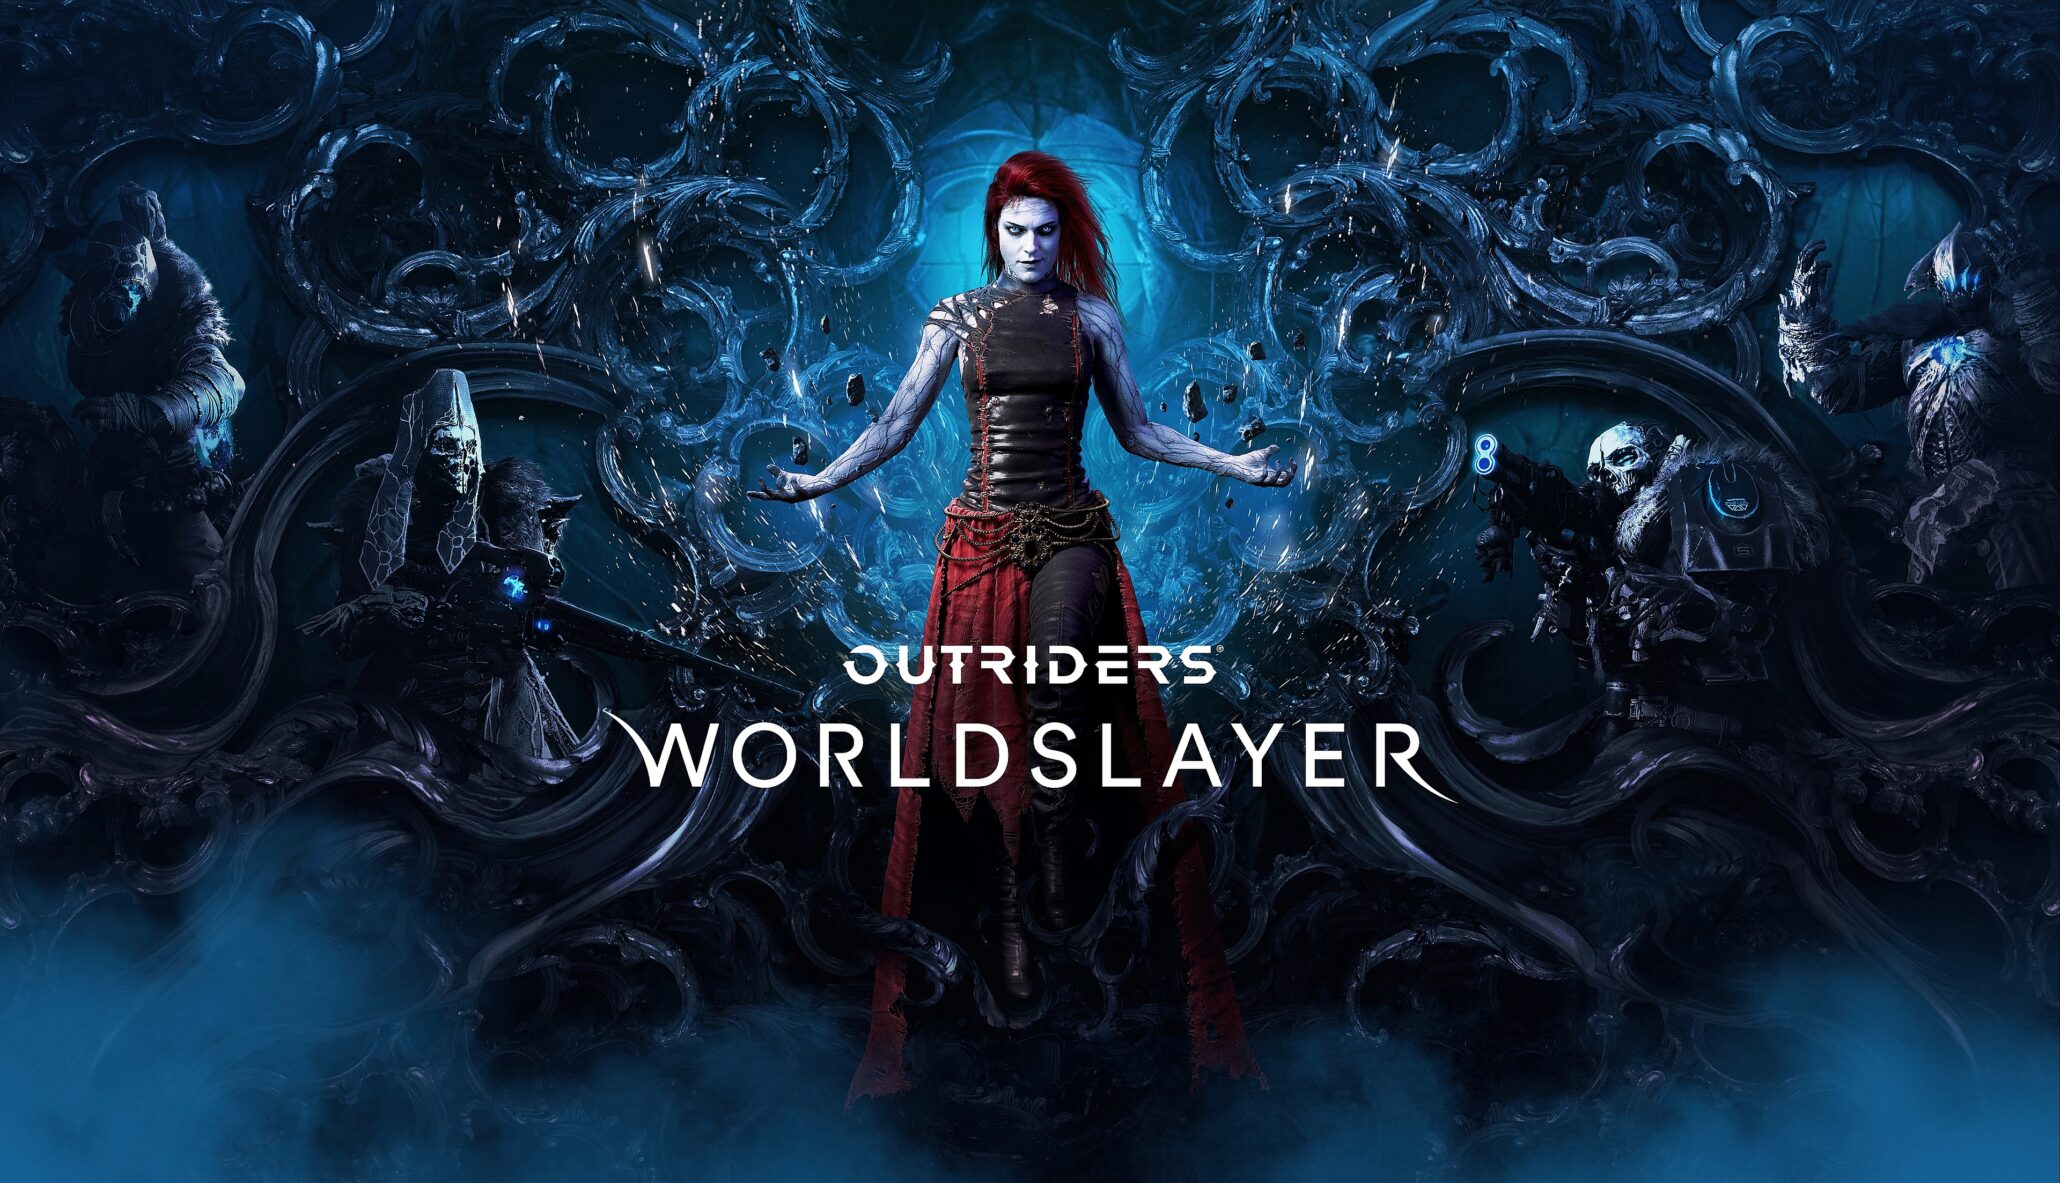 《Outriders》首個資料片“Worldslayer”公布 Steam國區180元促銷